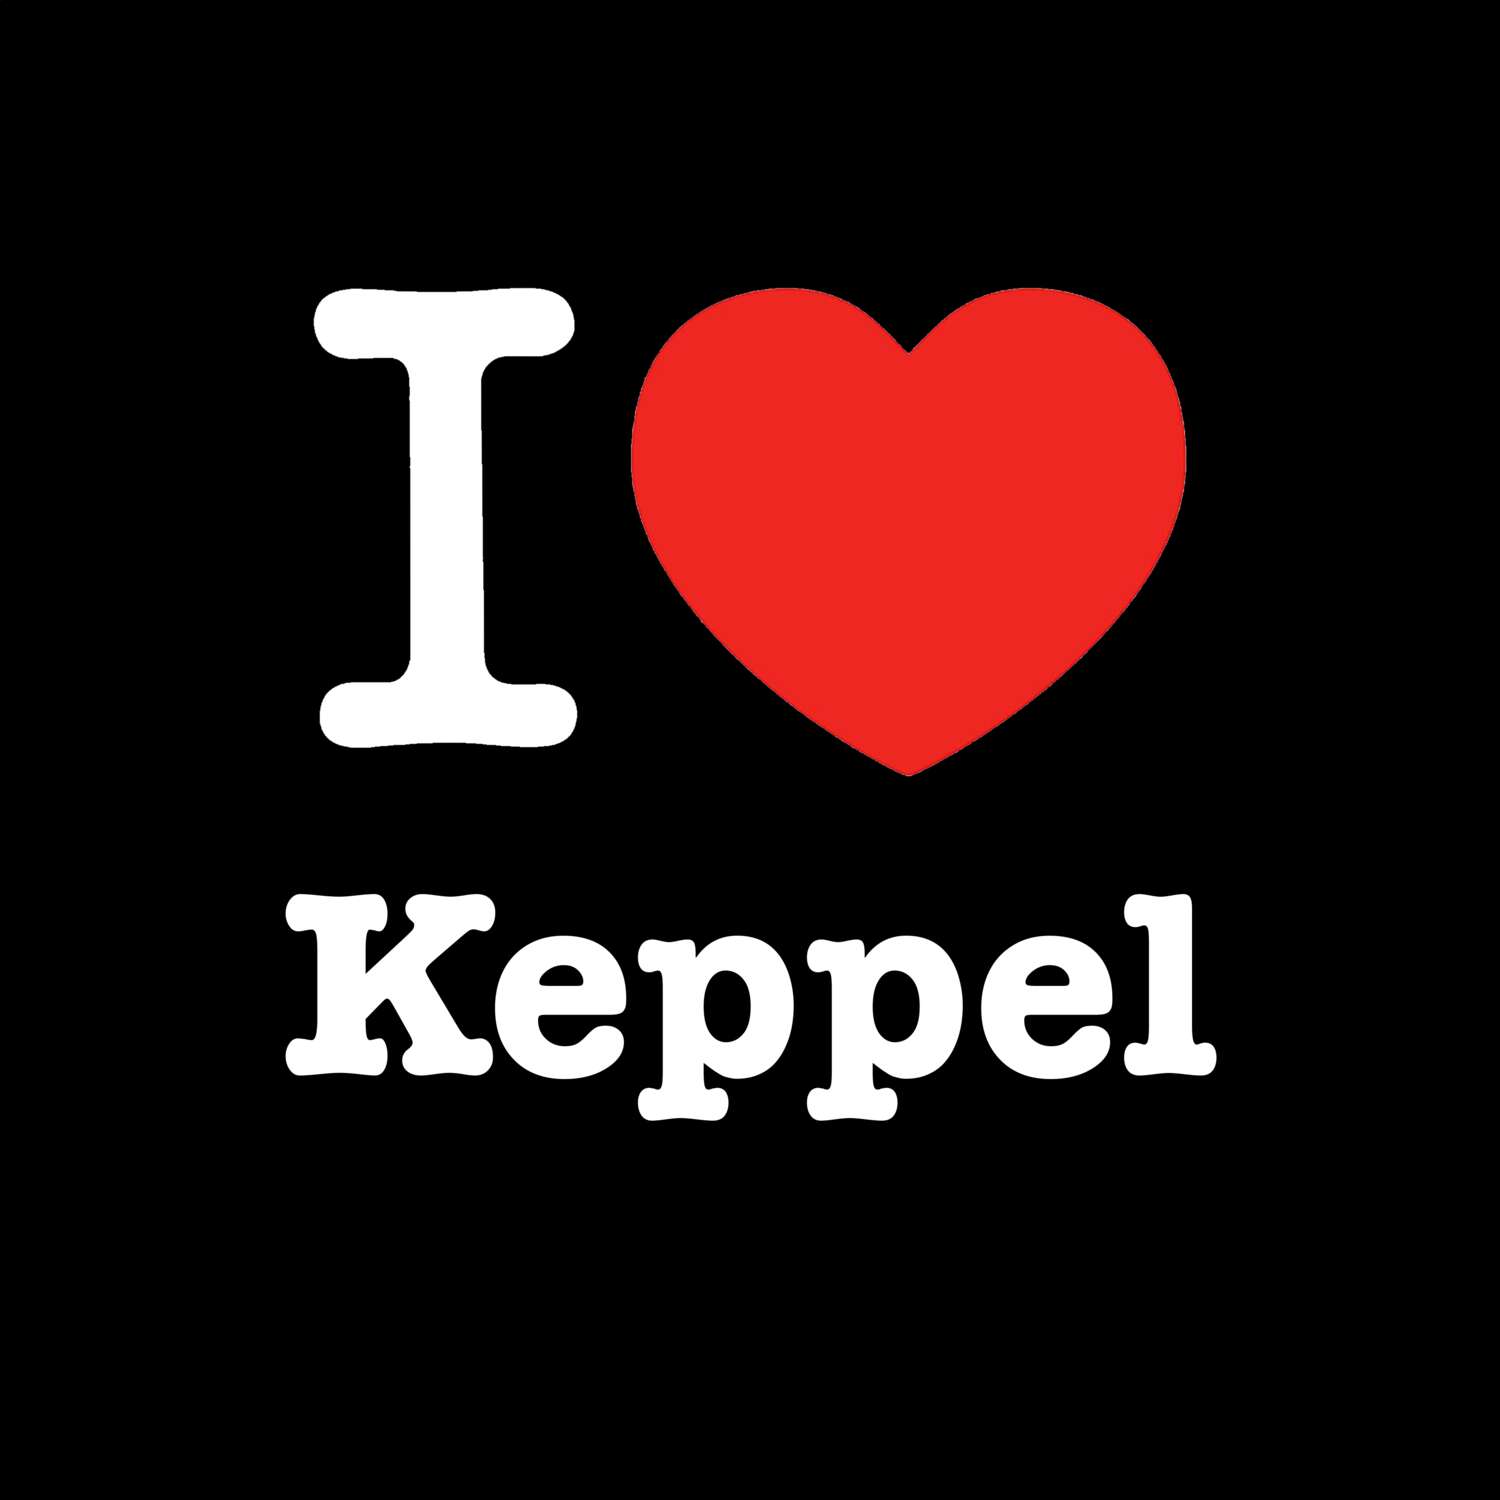 Keppel T-Shirt »I love«